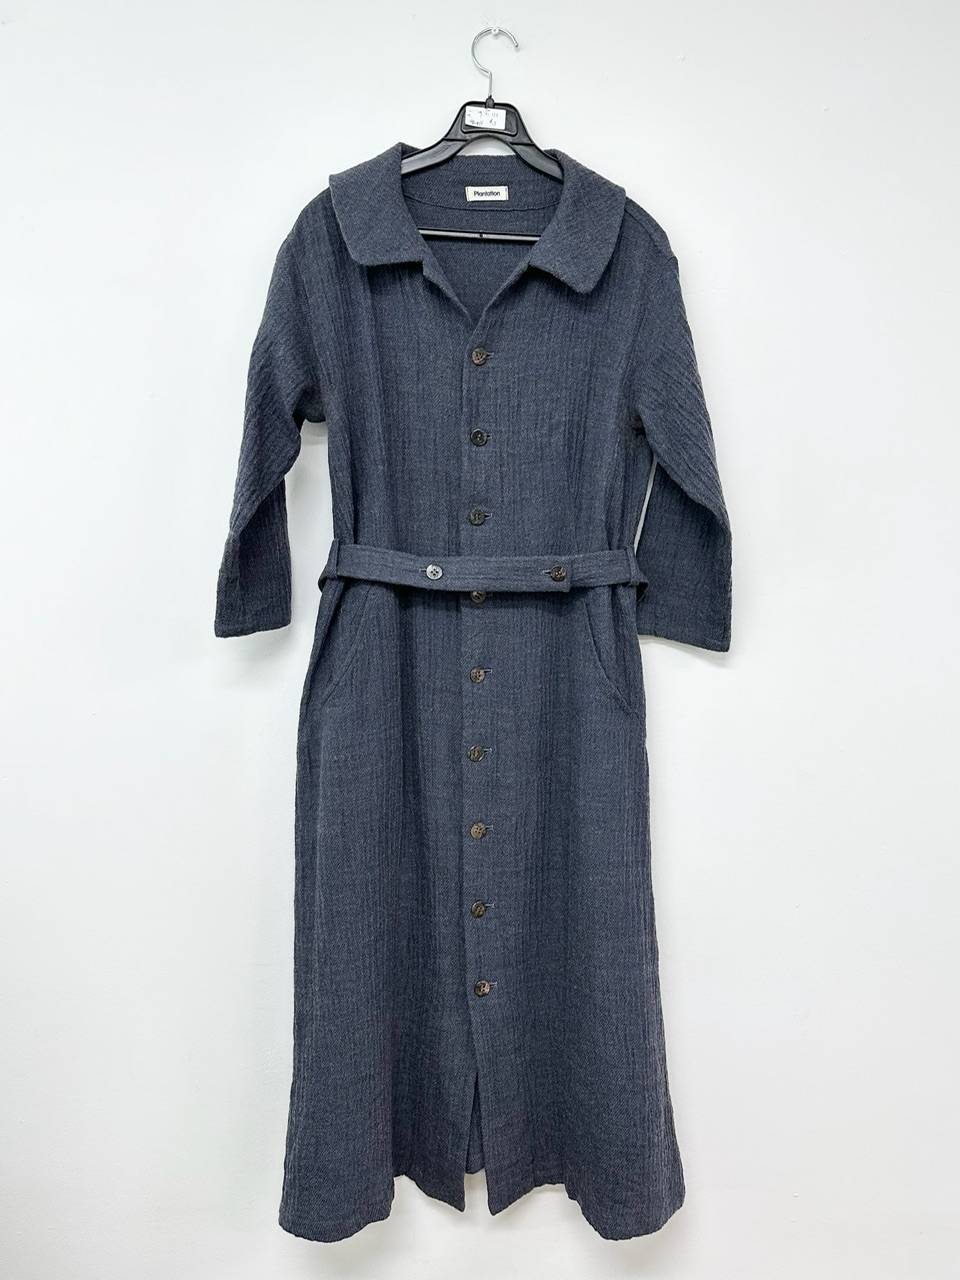 Plantation navy wool dress